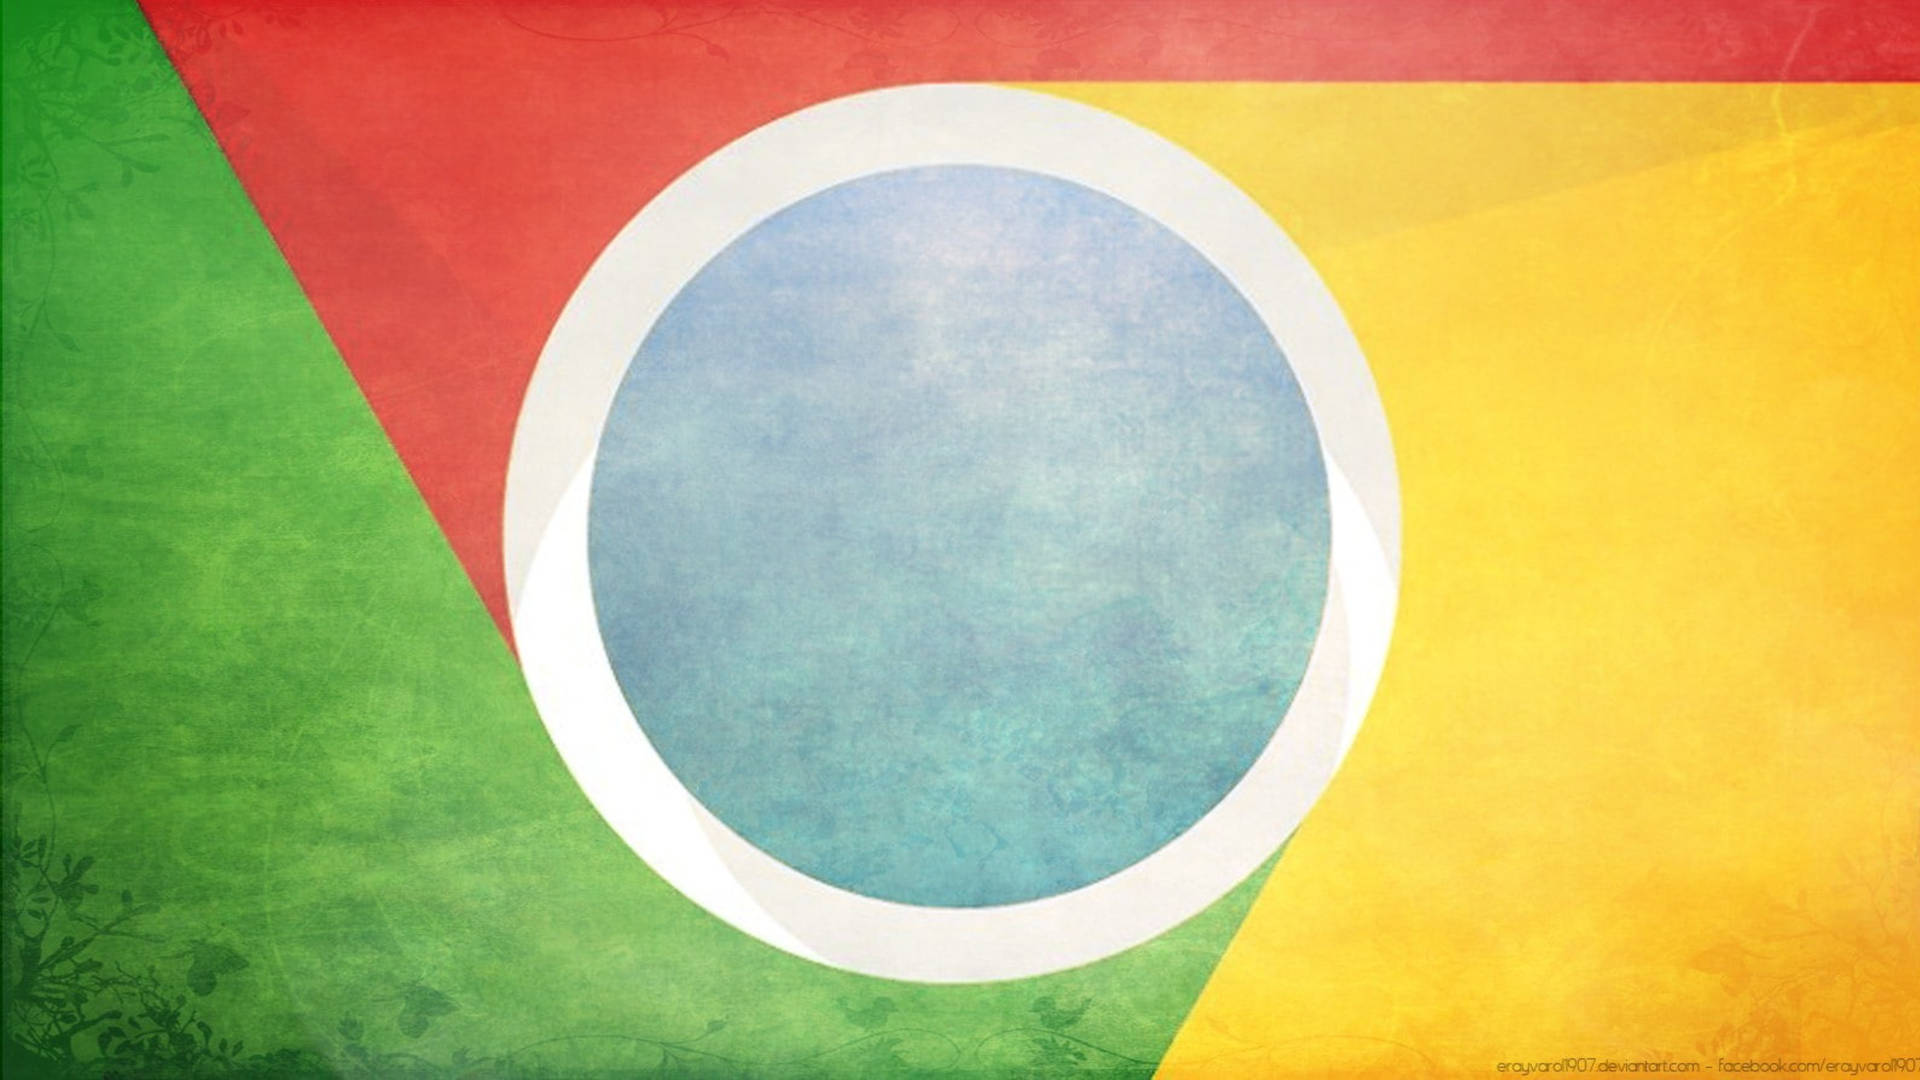 Retro-Themed Google Chrome Wallpaper